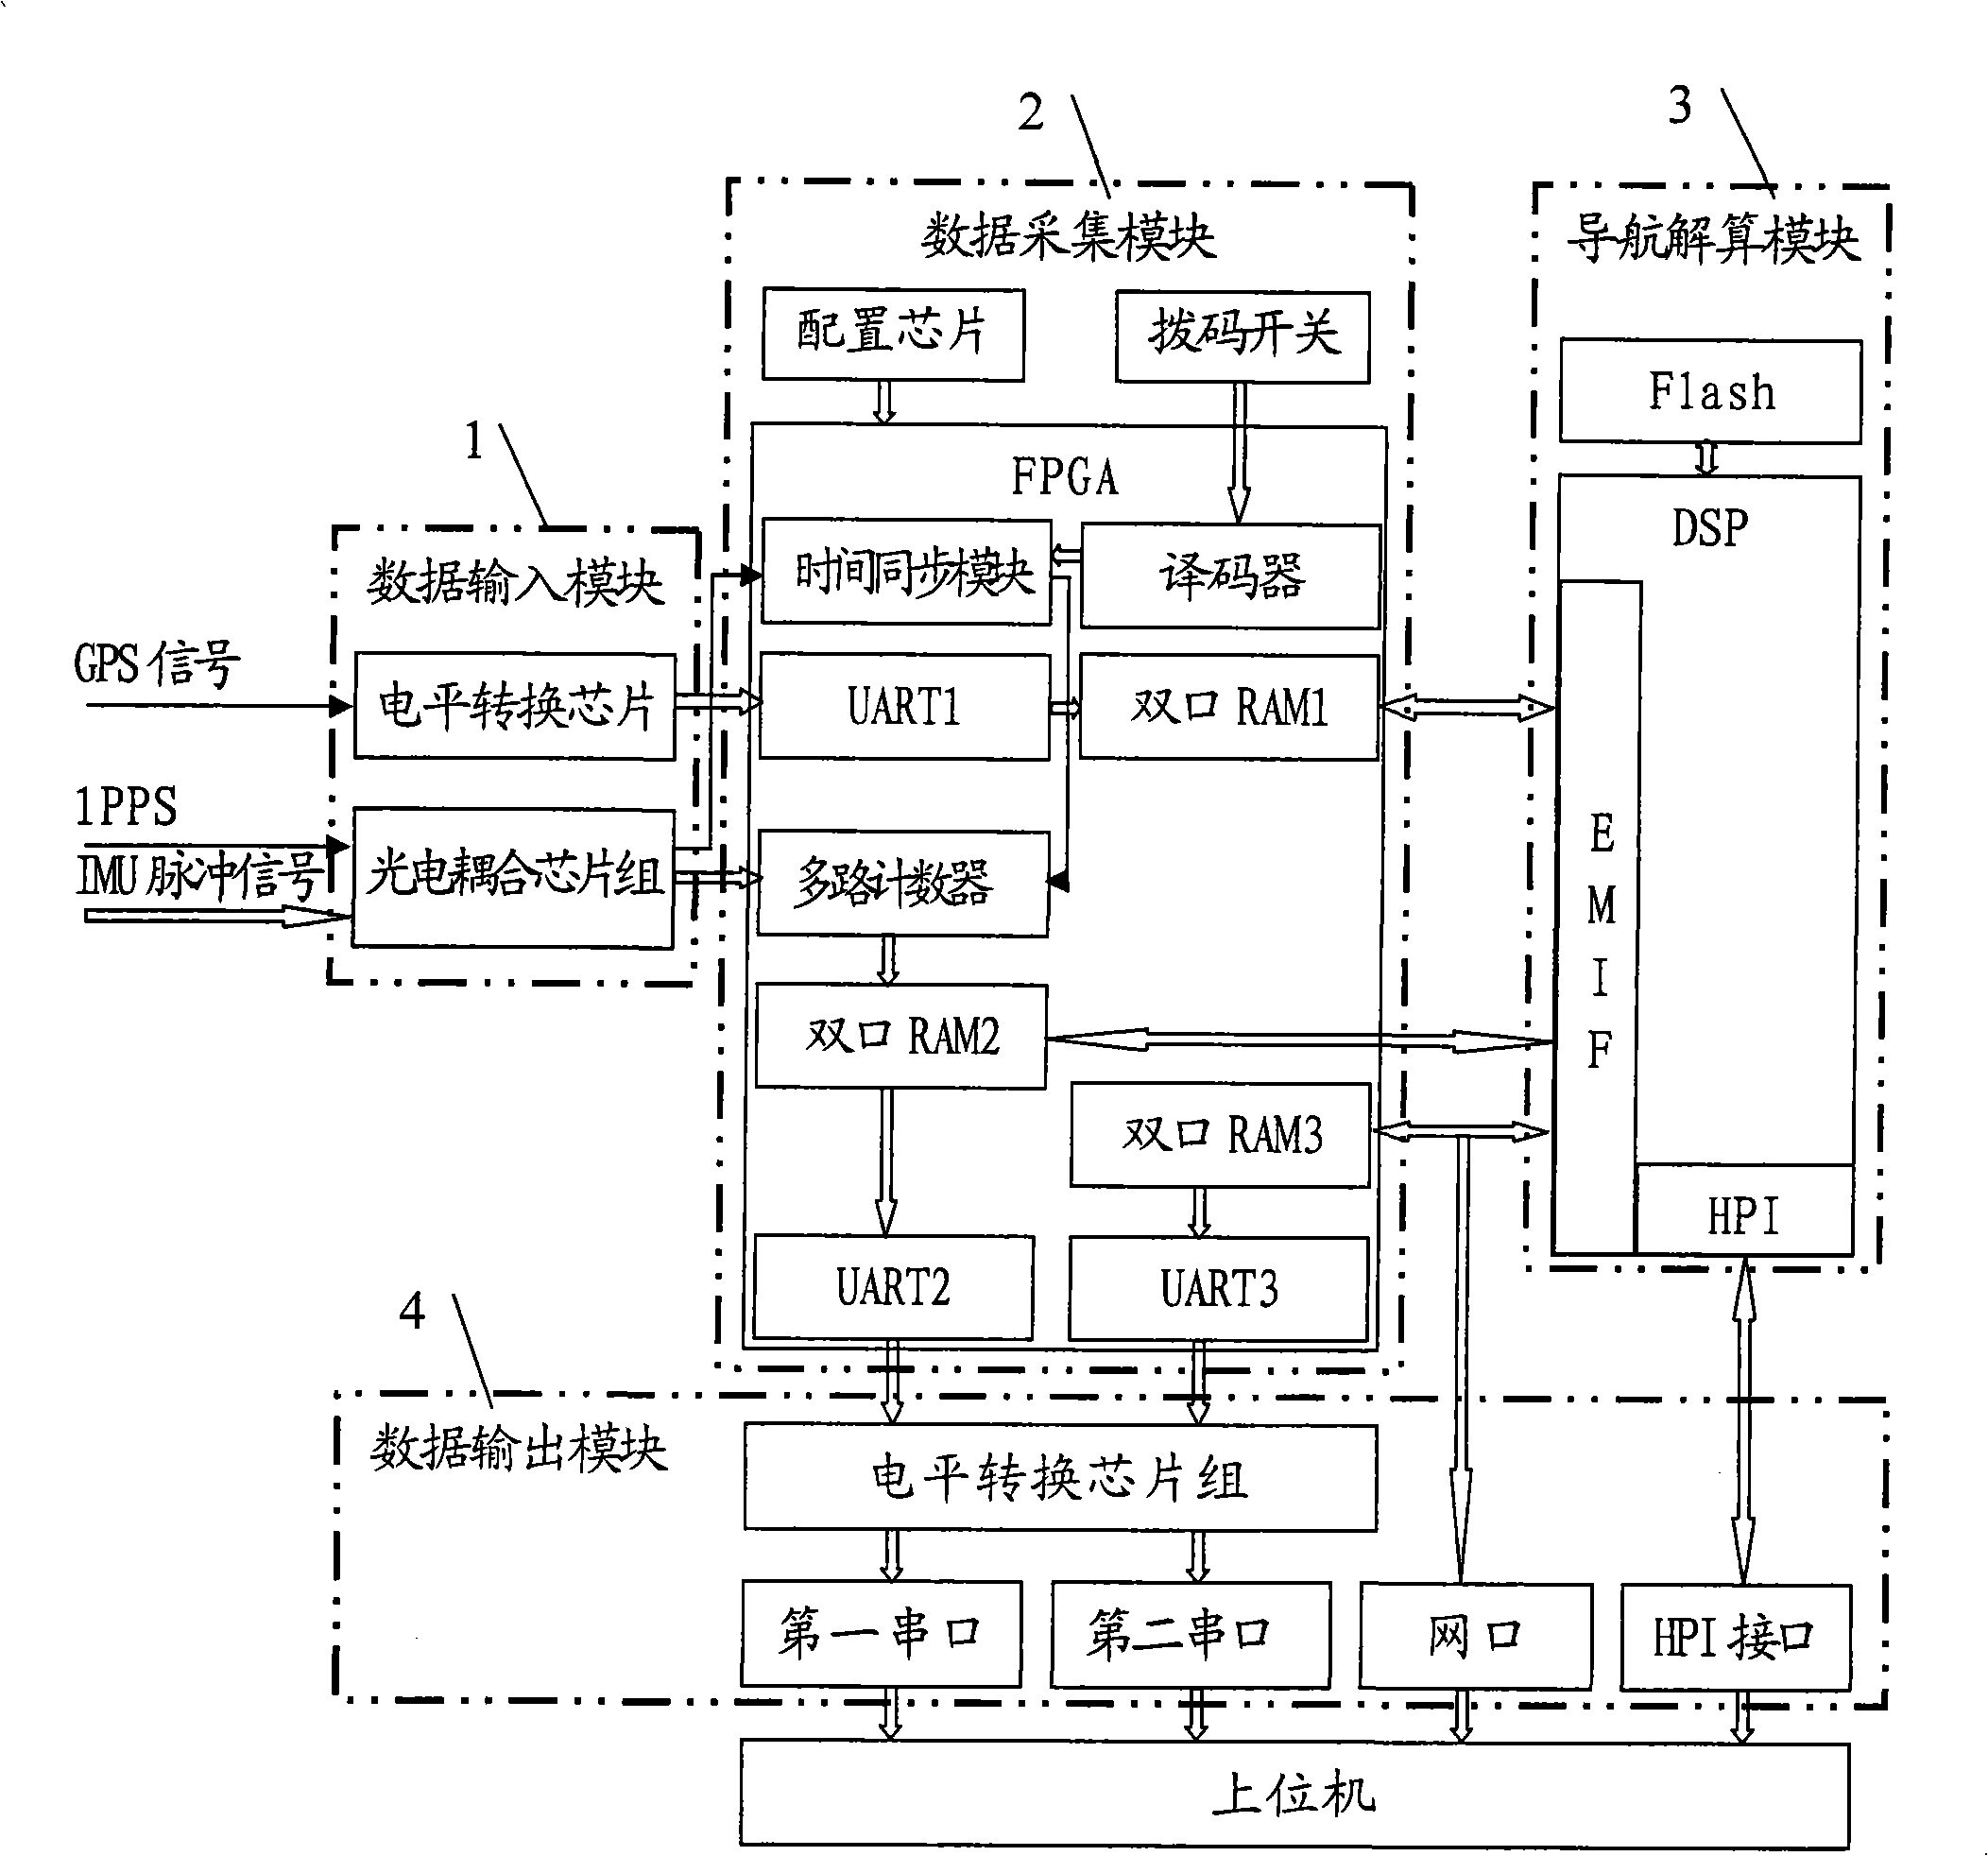 Integrated navigation computer based on DSP and FPGA